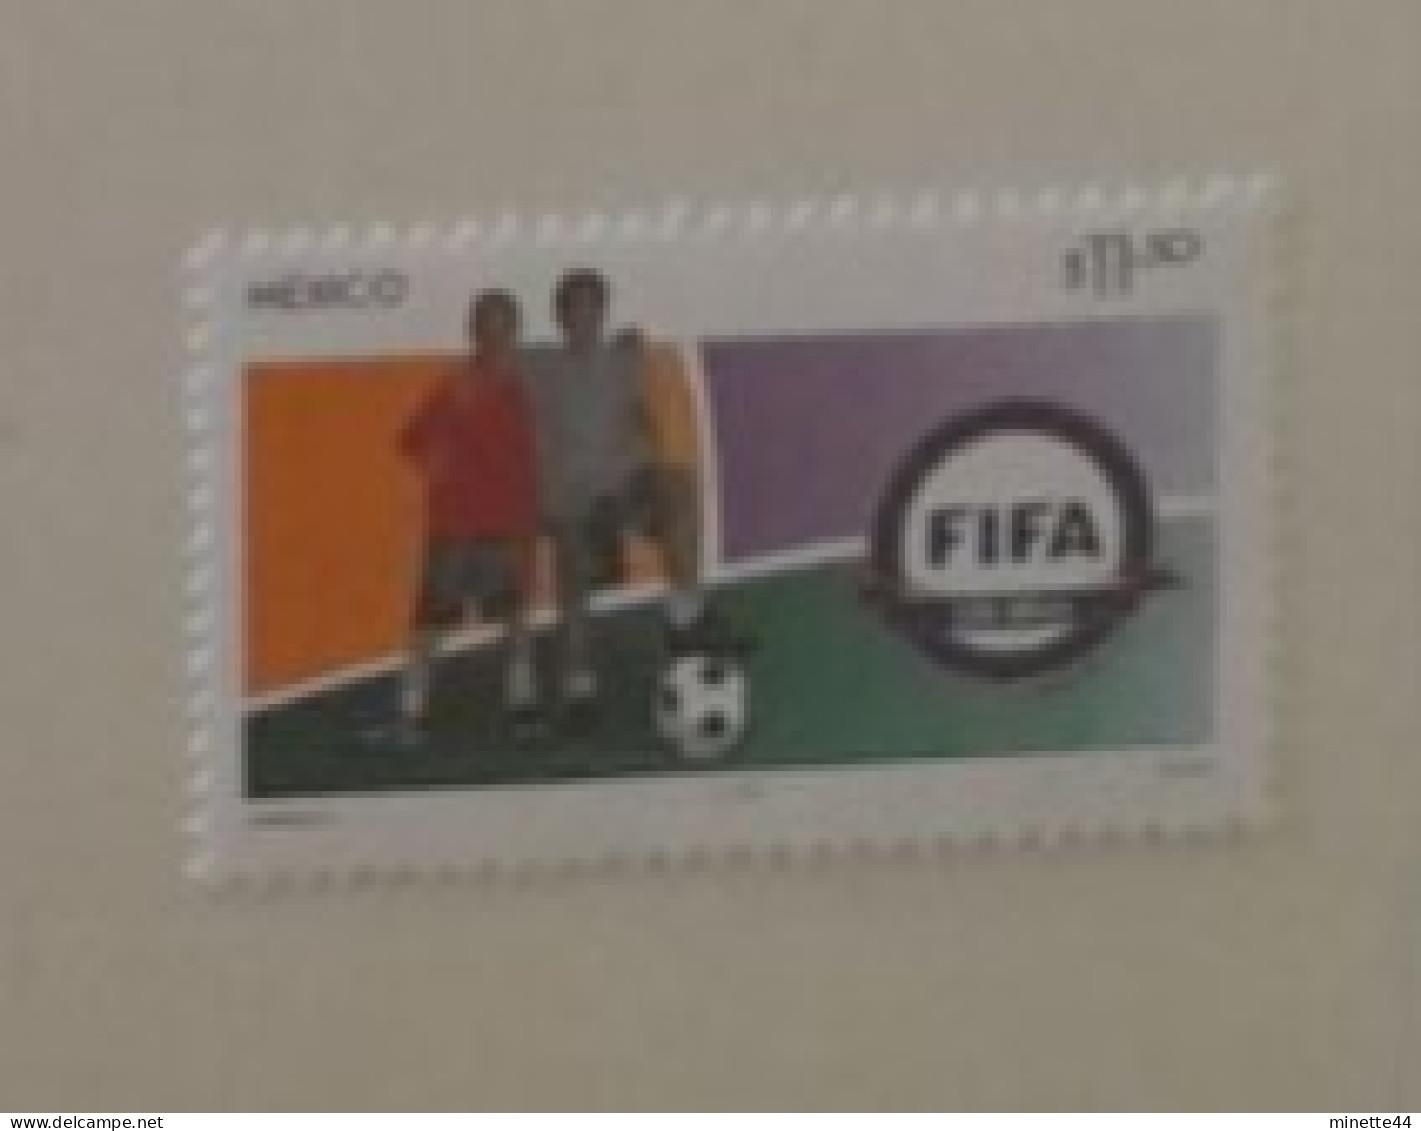 MEXIQUE MEXICO  2004 Fifa  MNH**   FOOTBALL FUSSBALL SOCCER CALCIO VOETBAL FUTBOL FUTEBOL FOOT FOTBAL - Unused Stamps